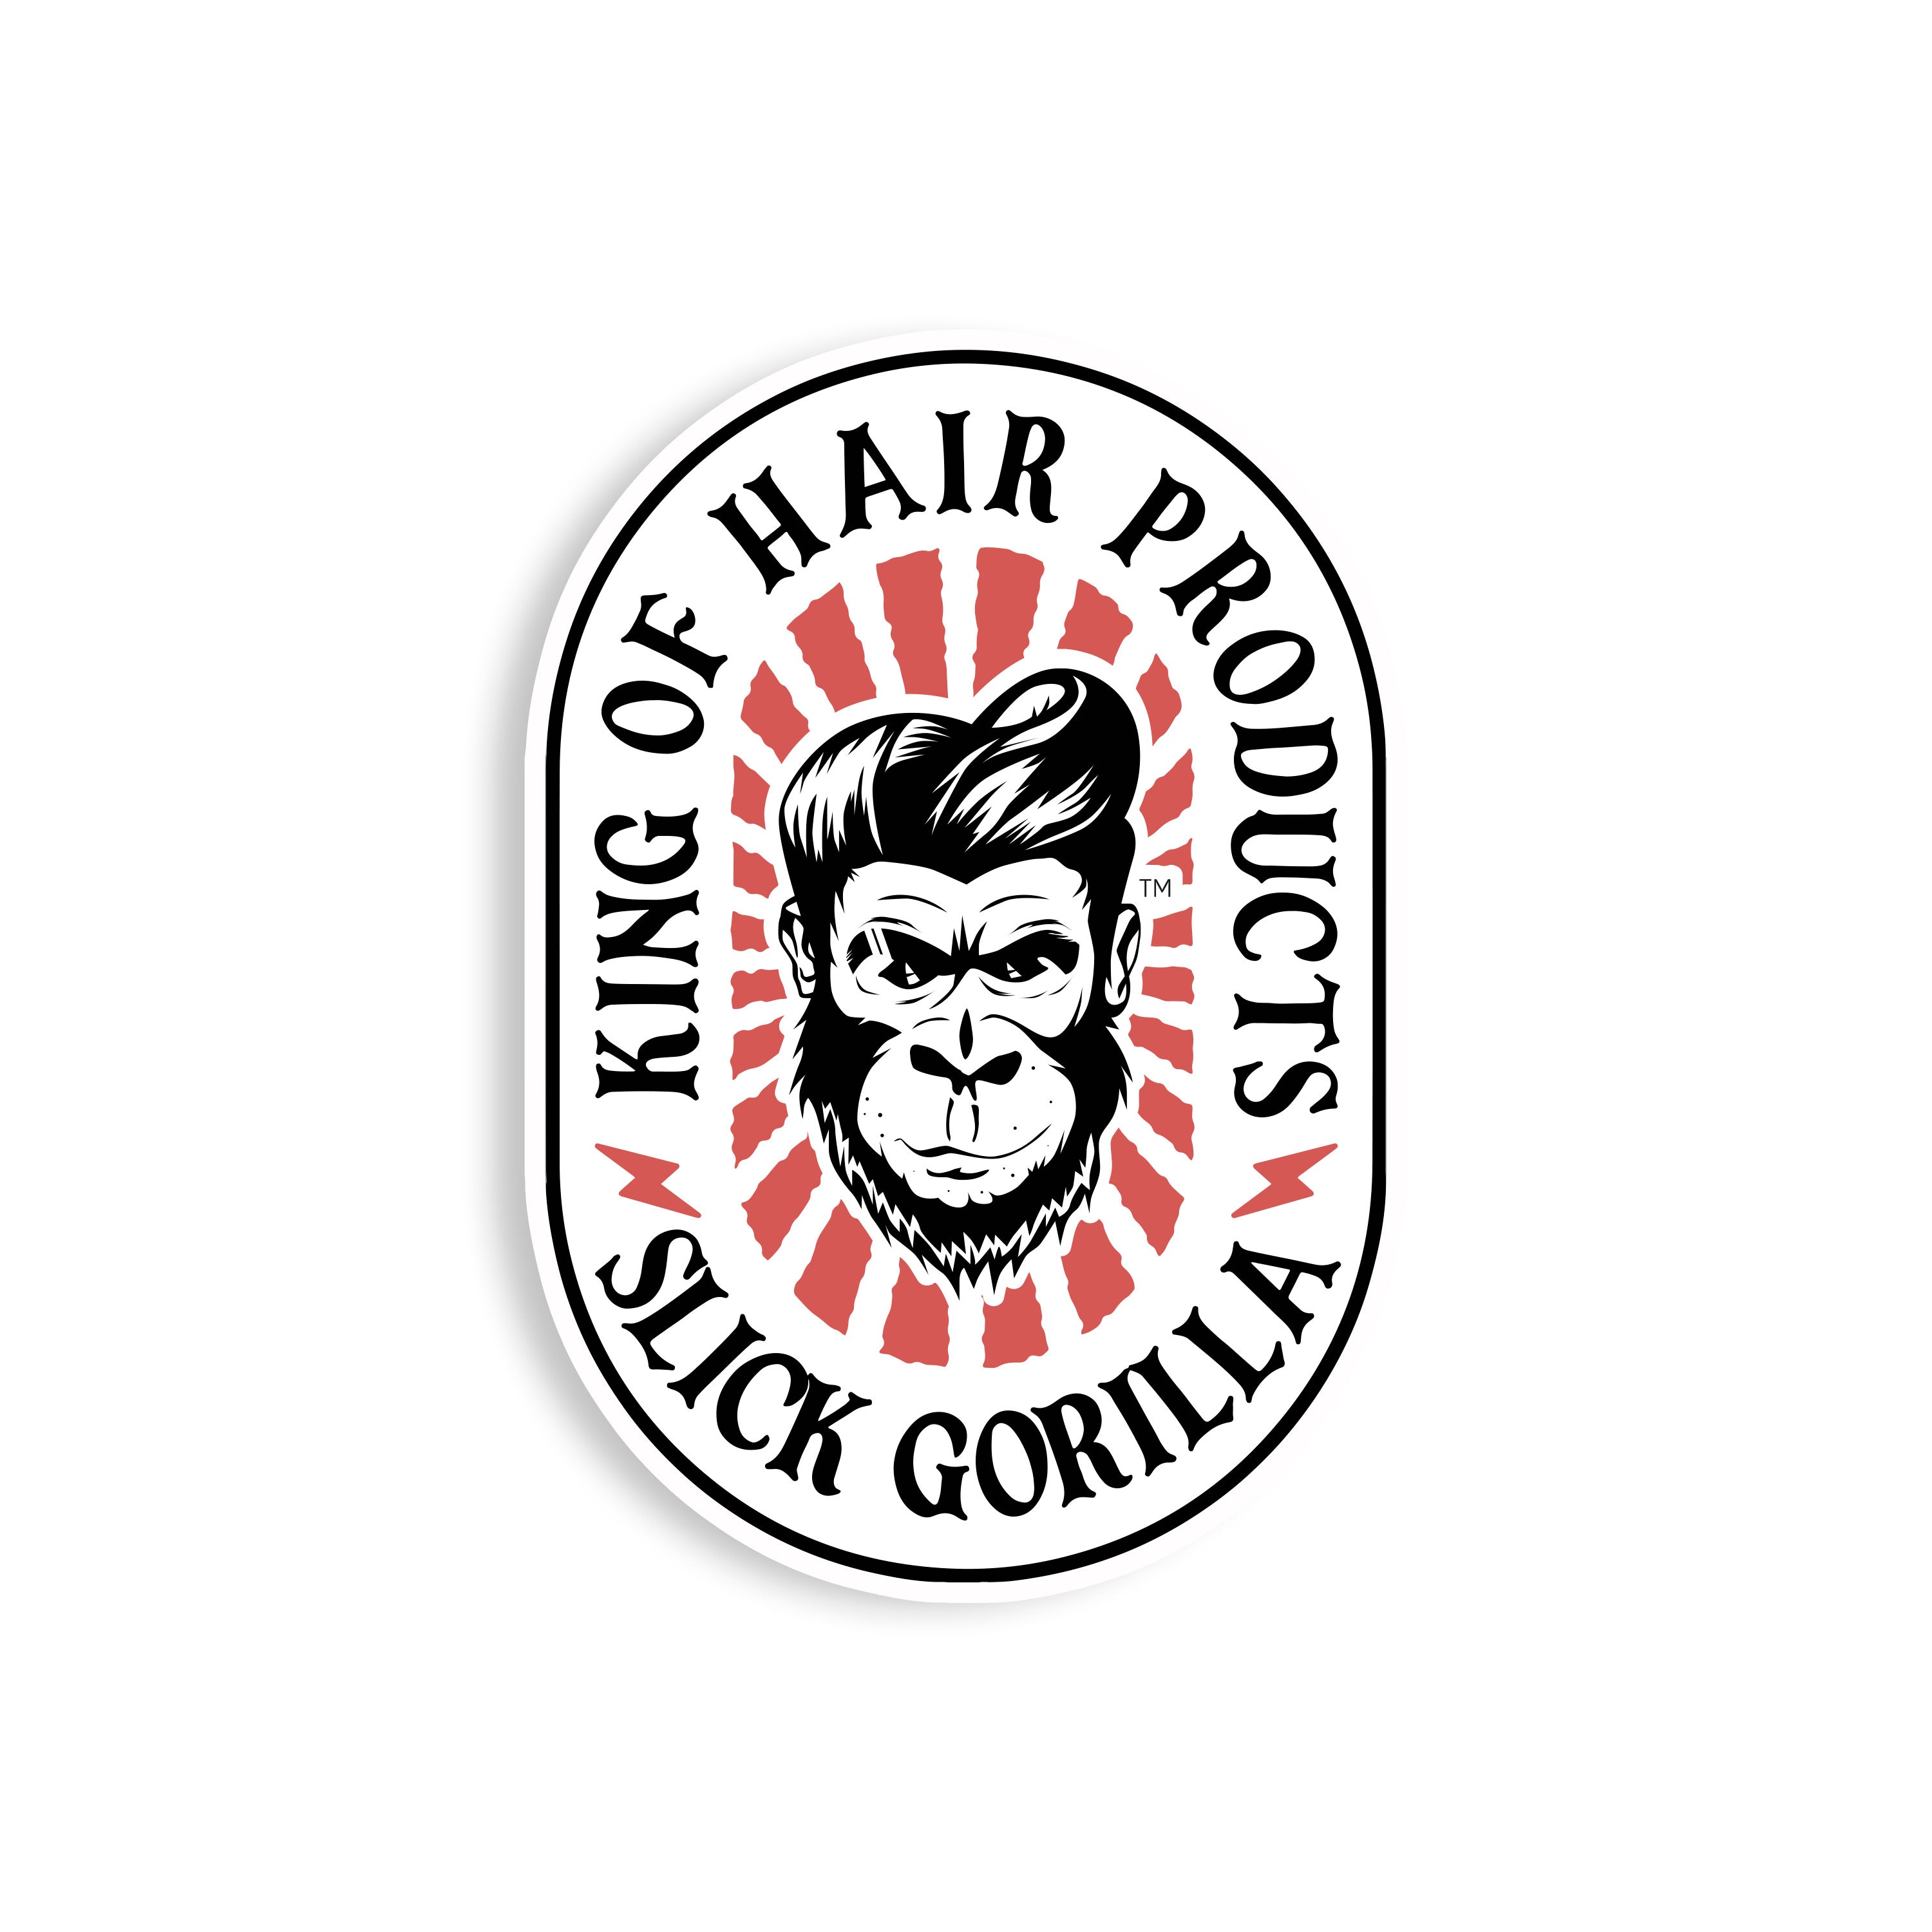 Slick Gorilla Sticker Pack